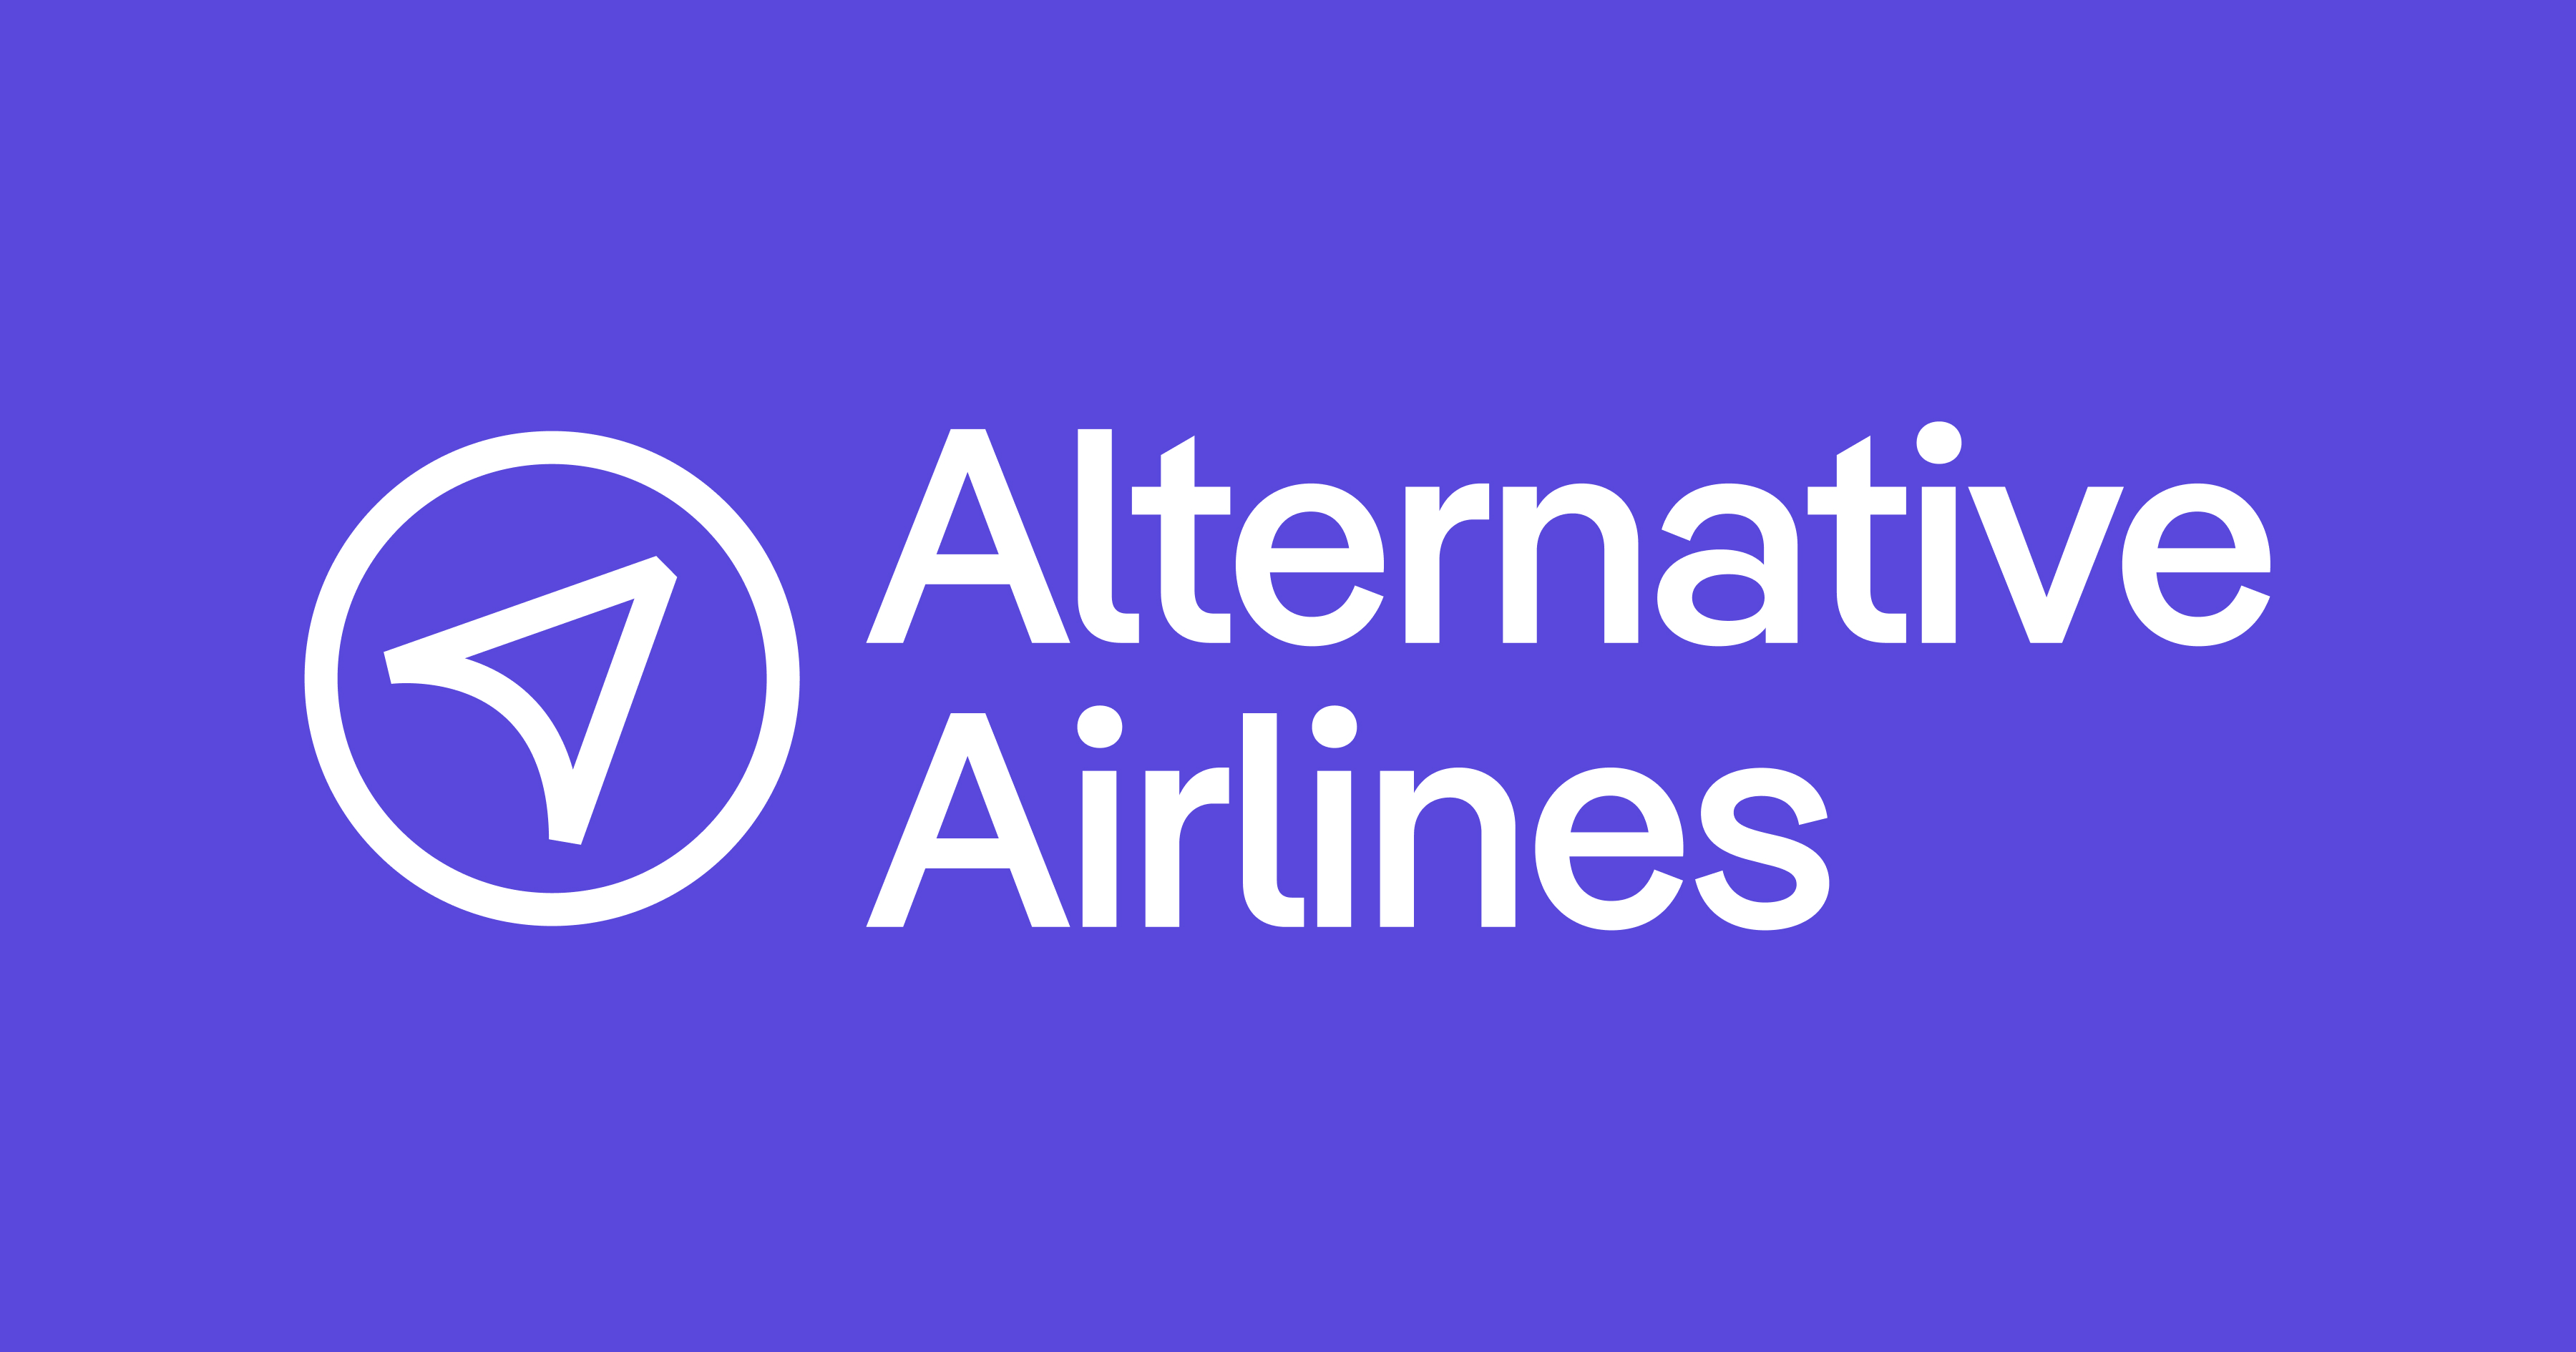 www.alternativeairlines.com